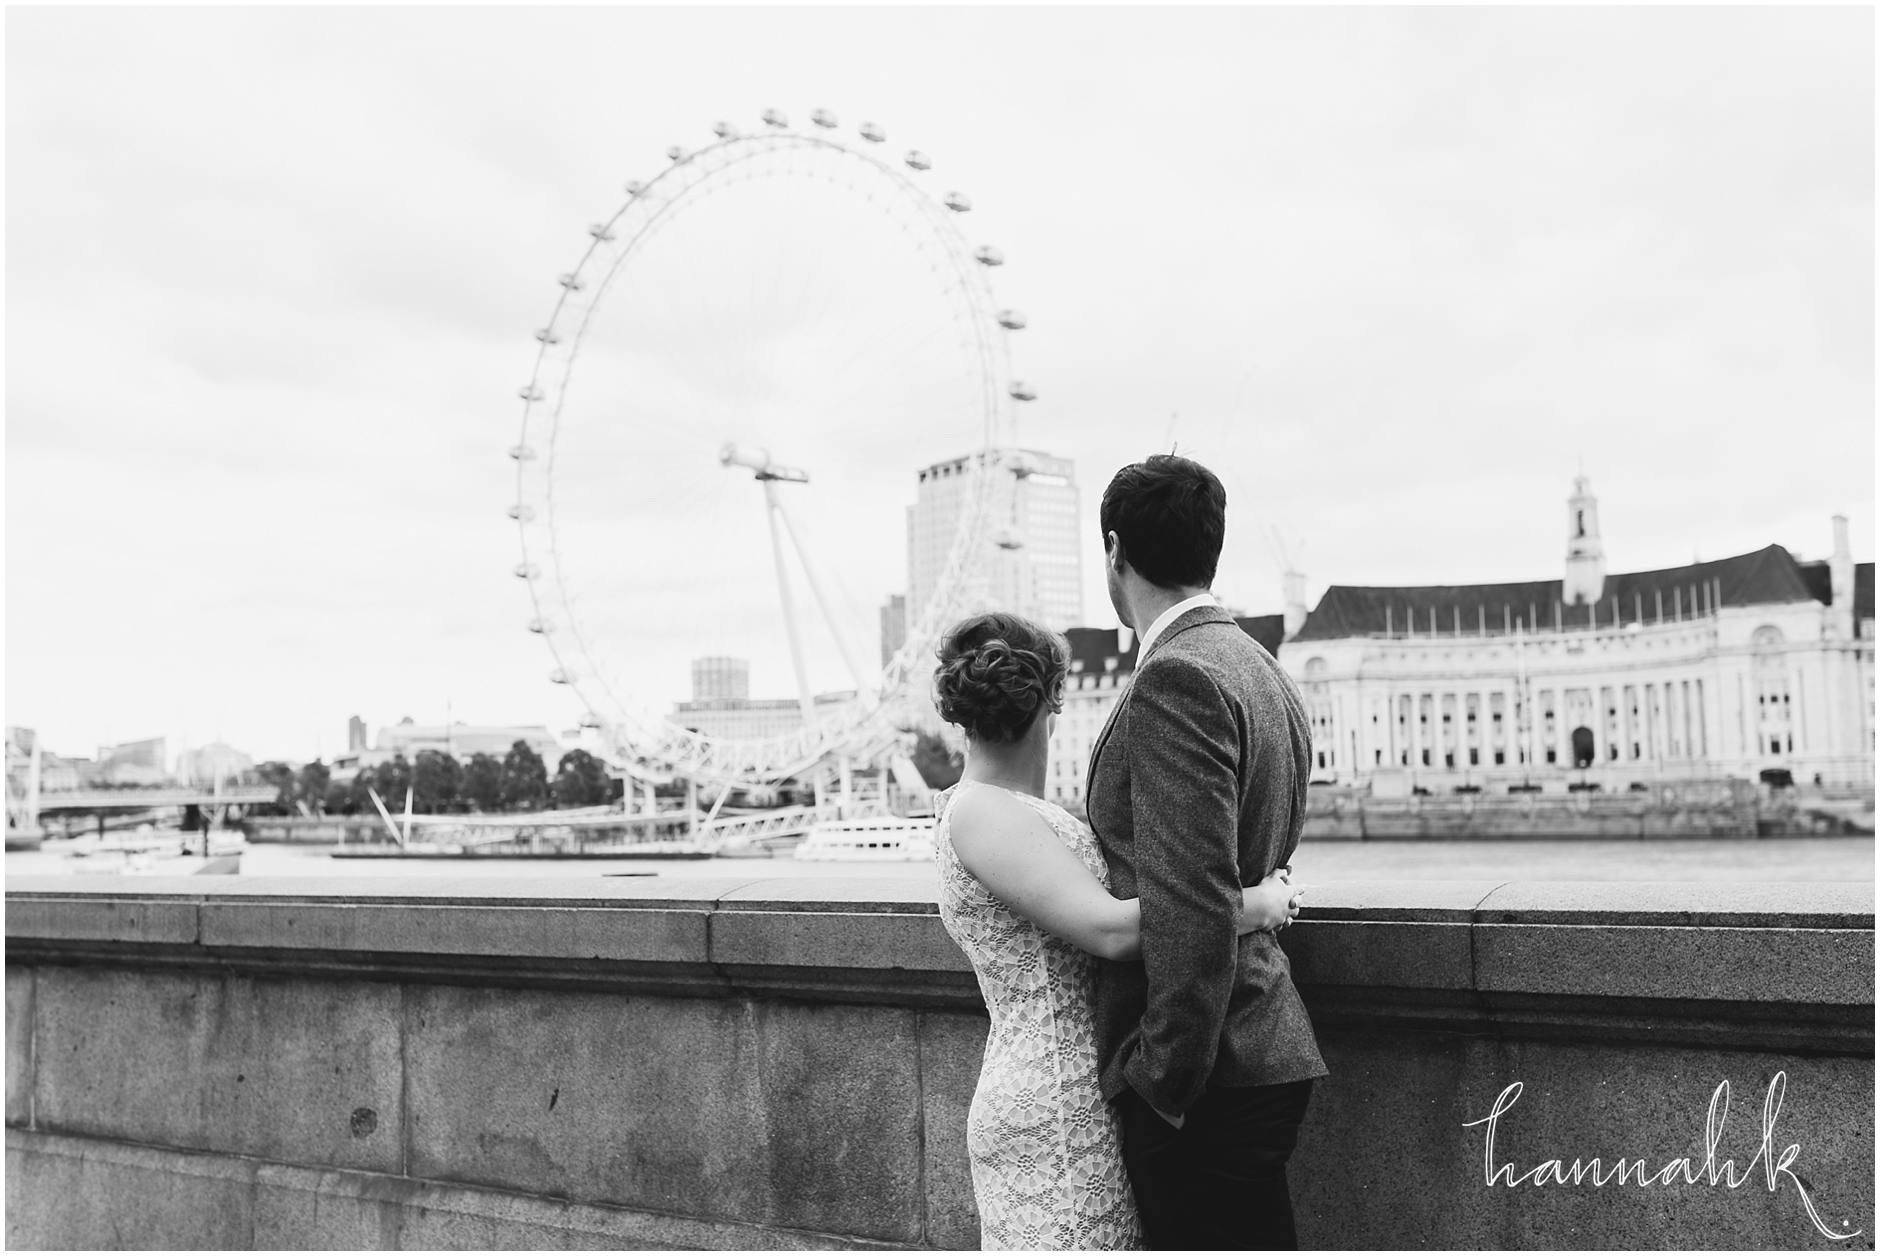 hannah-k-photography-london-engagement-photography-destination-wedding-photographer-2